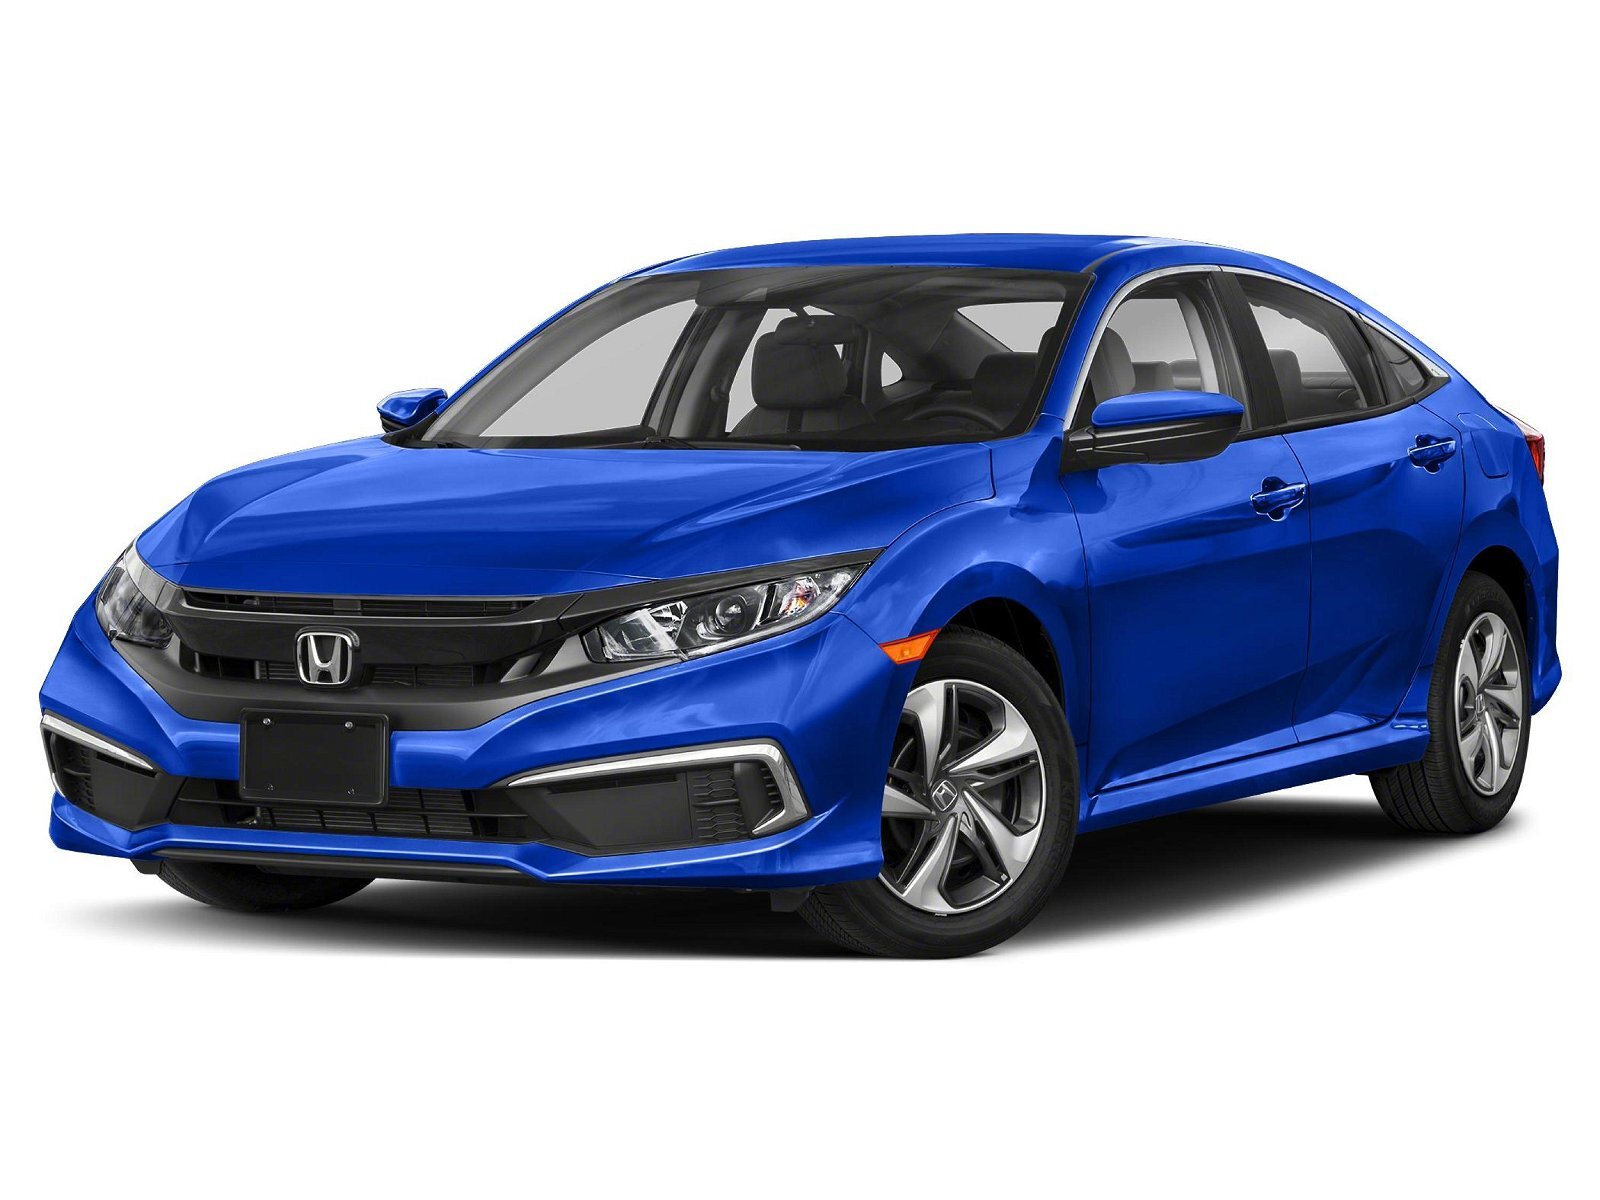 2019 Honda Civic LX FREE SET OF WINTER TIRES ON STEEL RIMS W/PURCHA